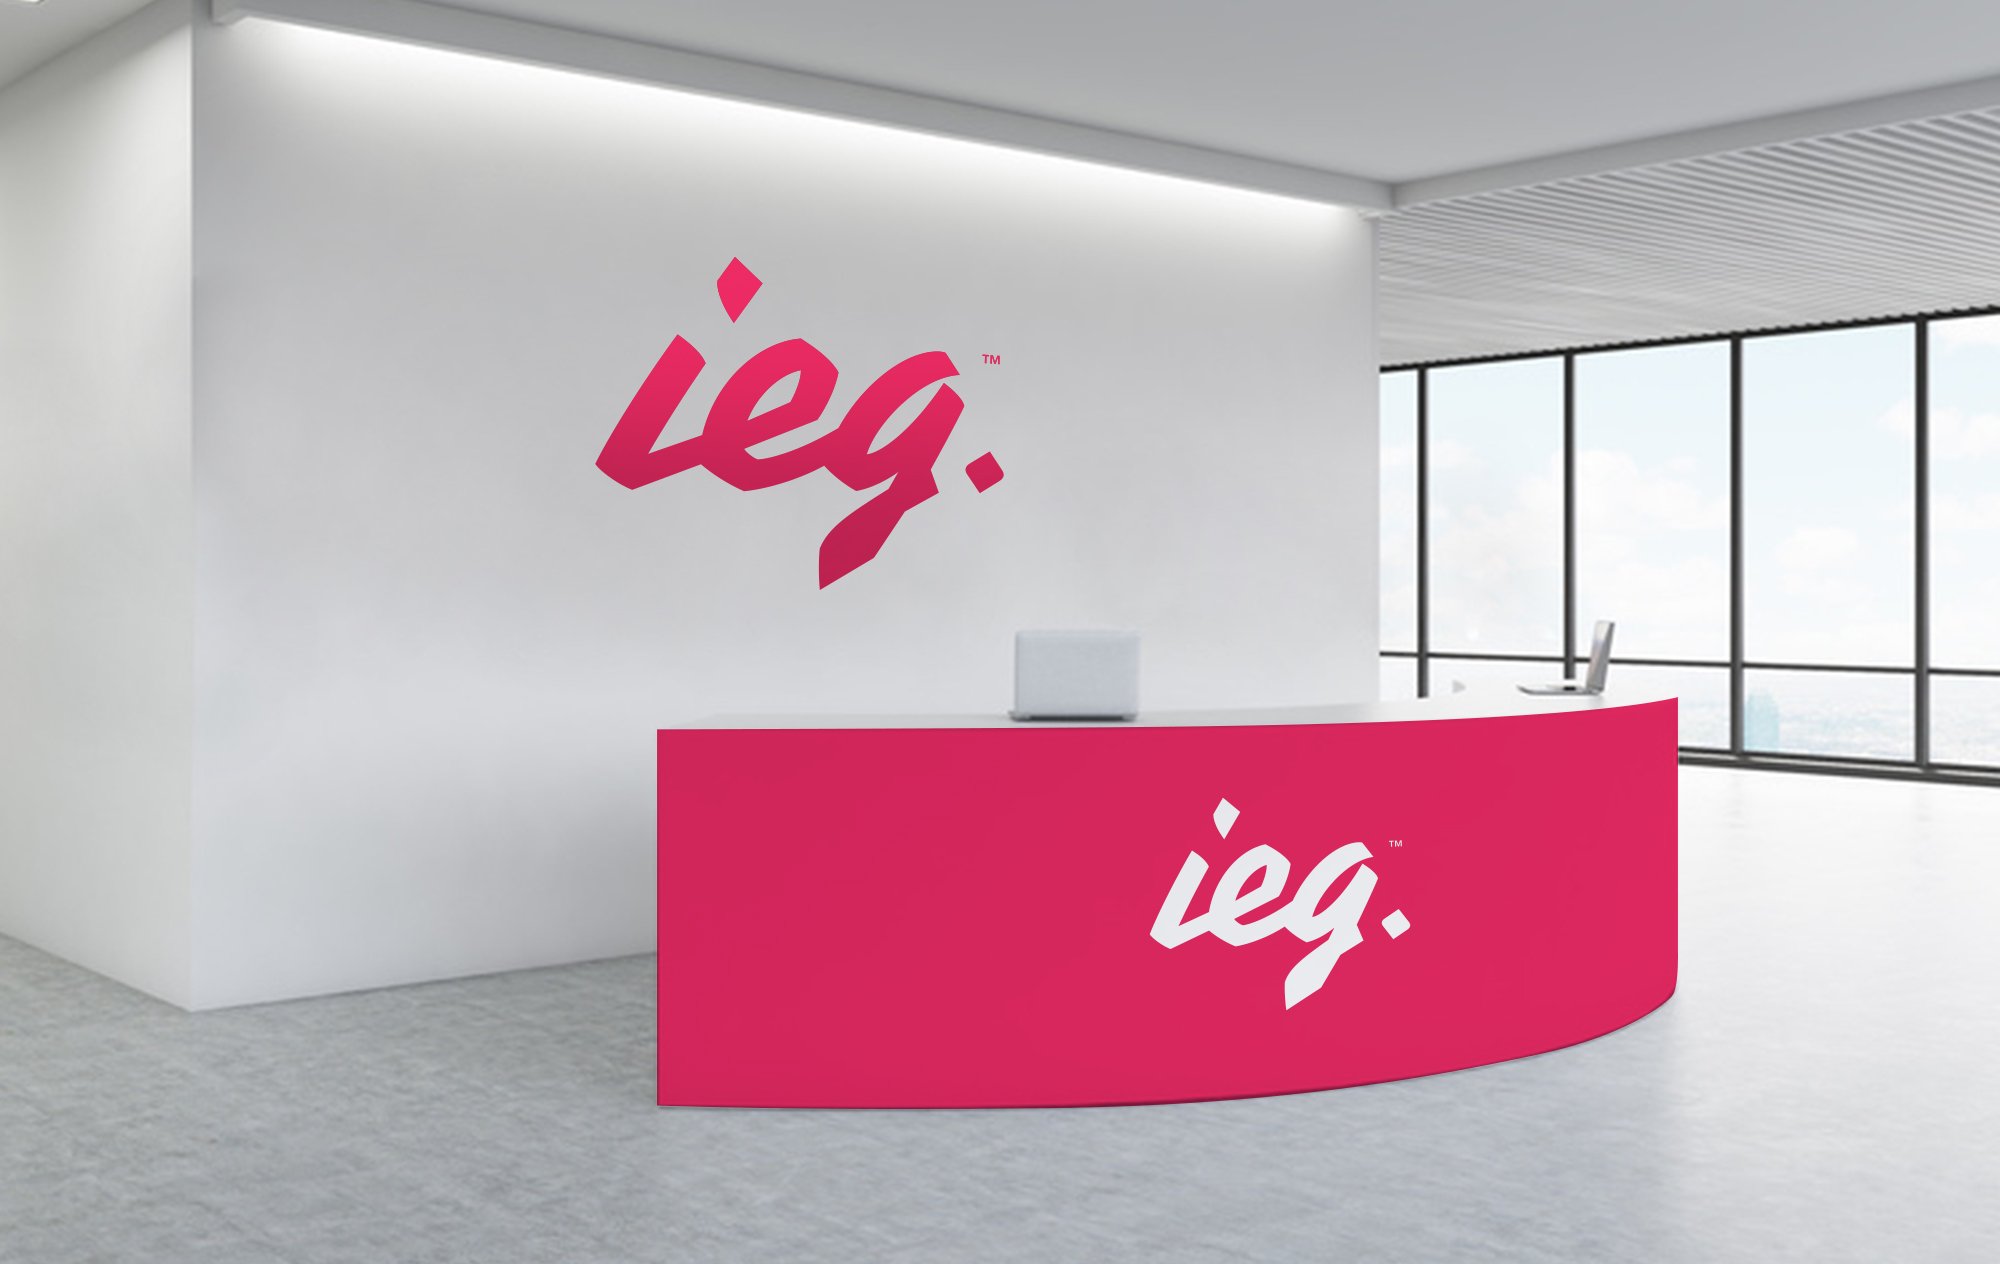 IEG logo in environment